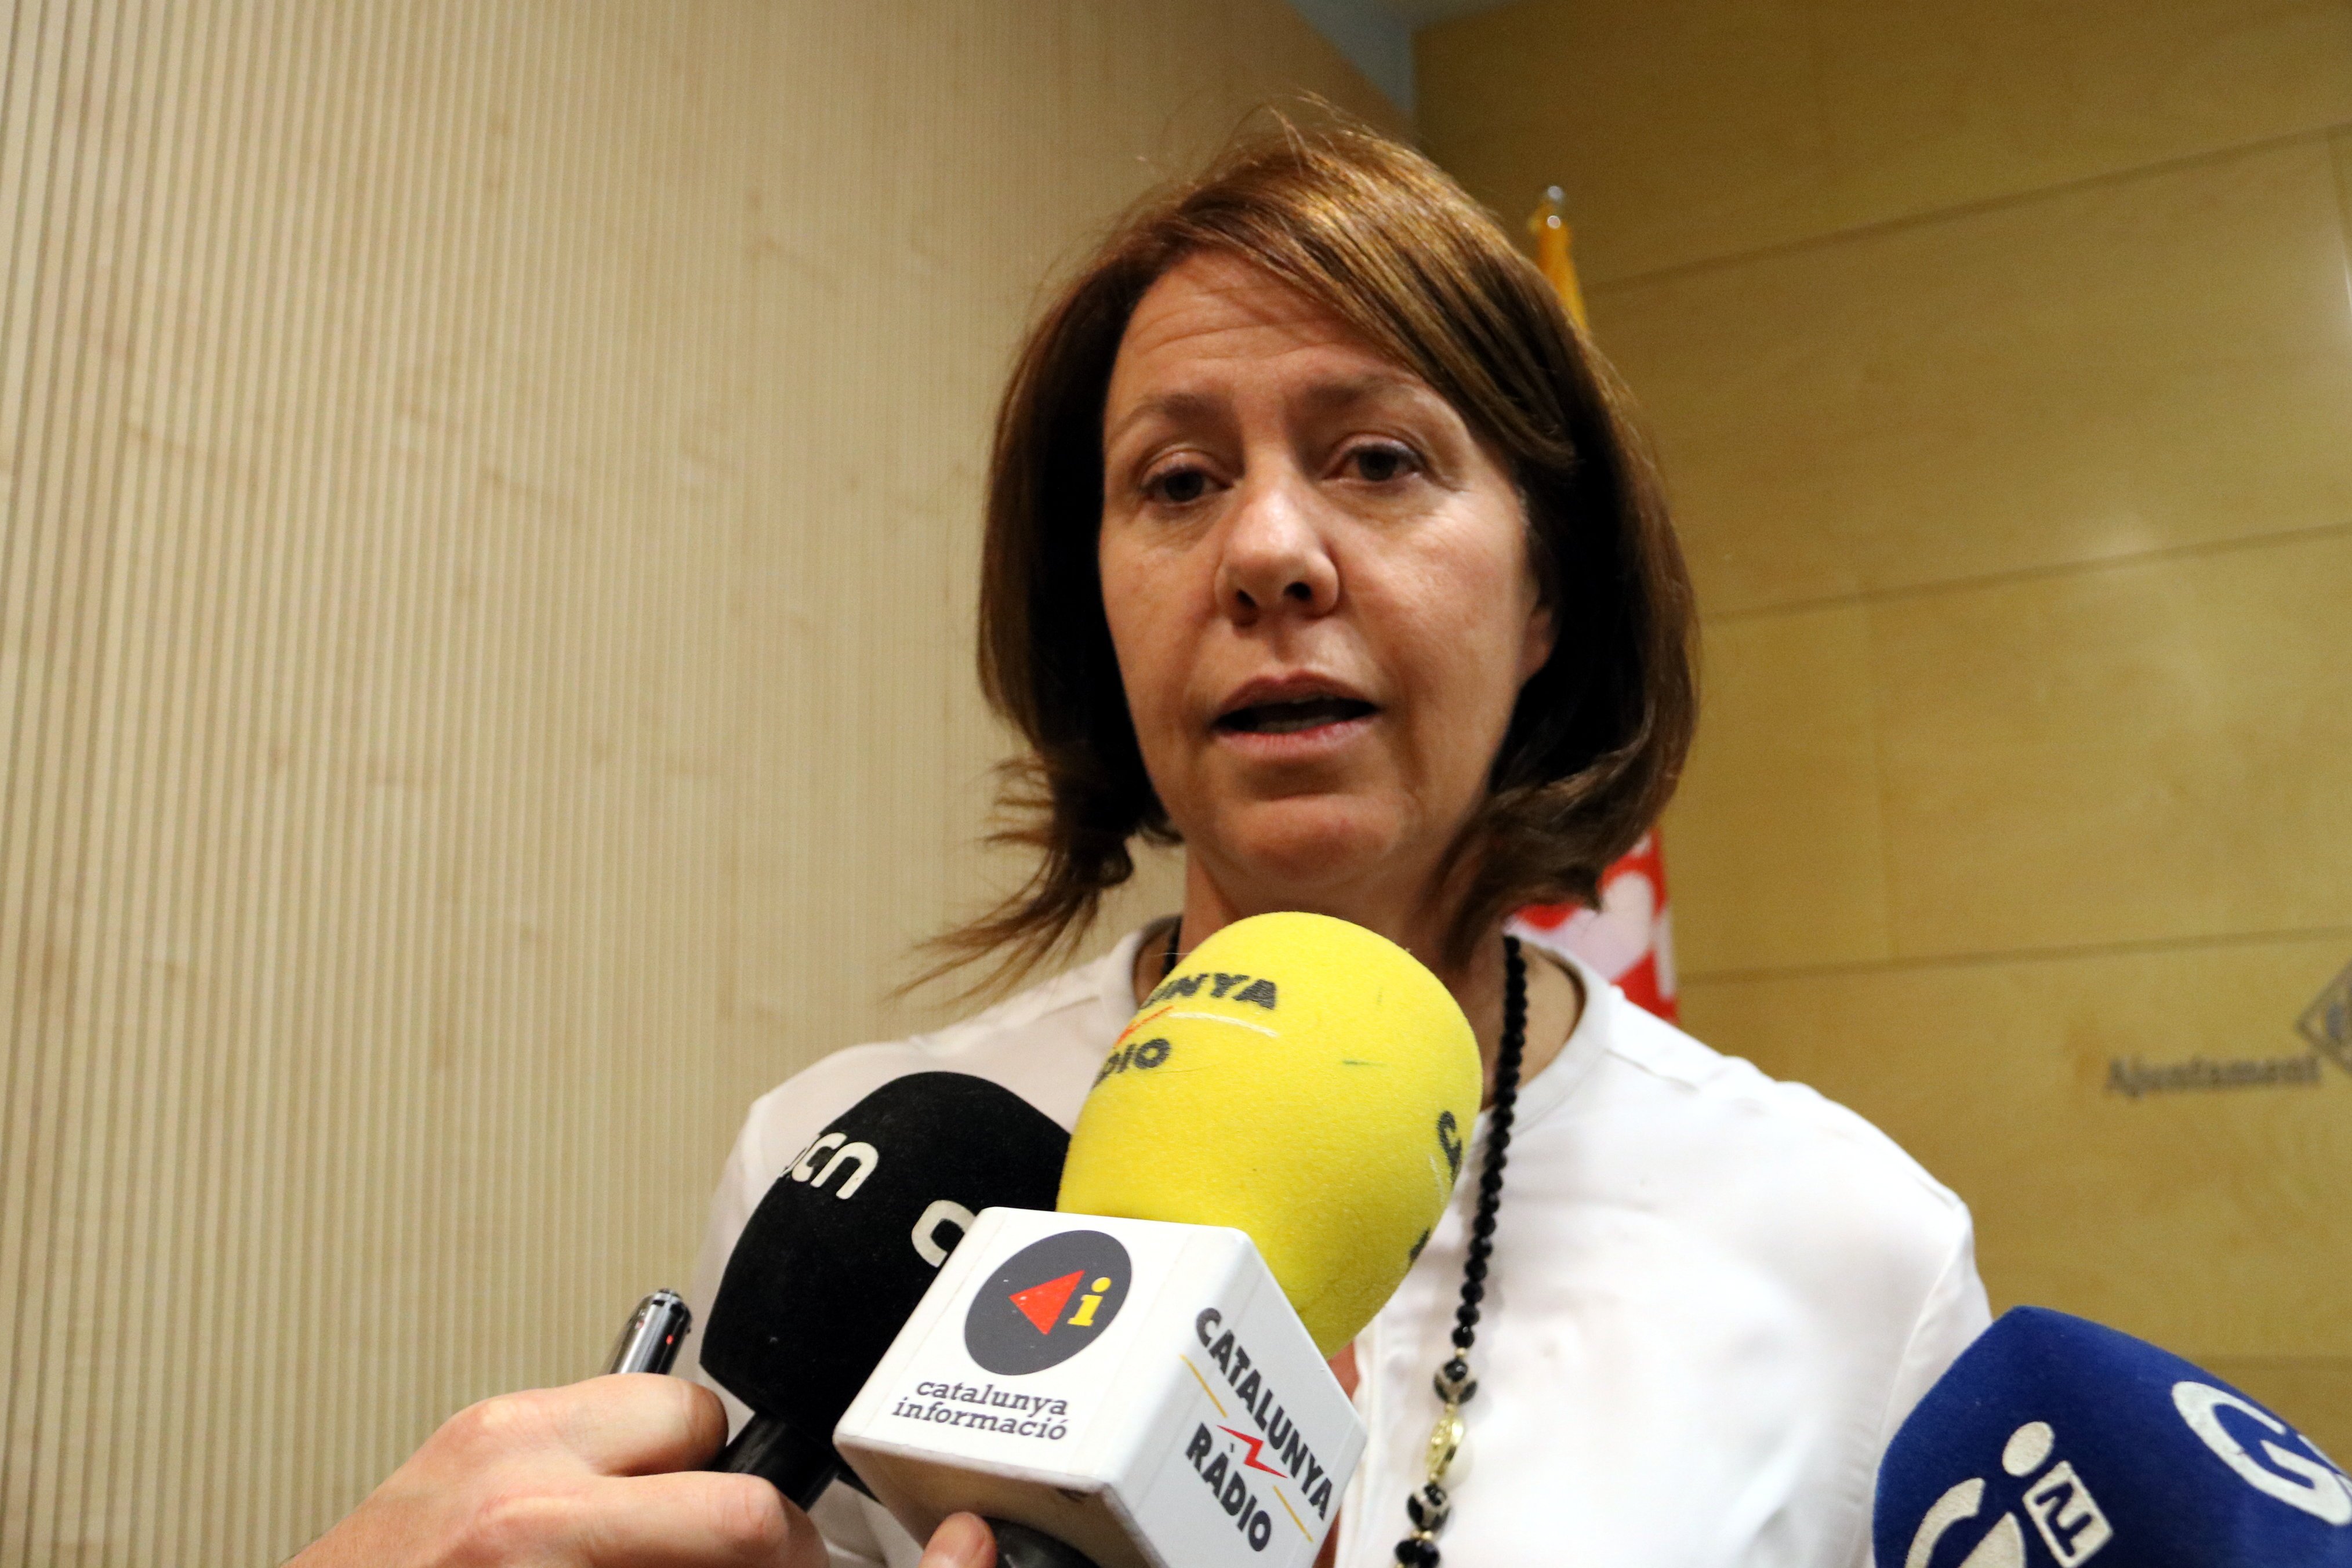 La alcaldesa de Girona planta cara a Millo: "No homenajearemos a aquellos que nos zurraron"